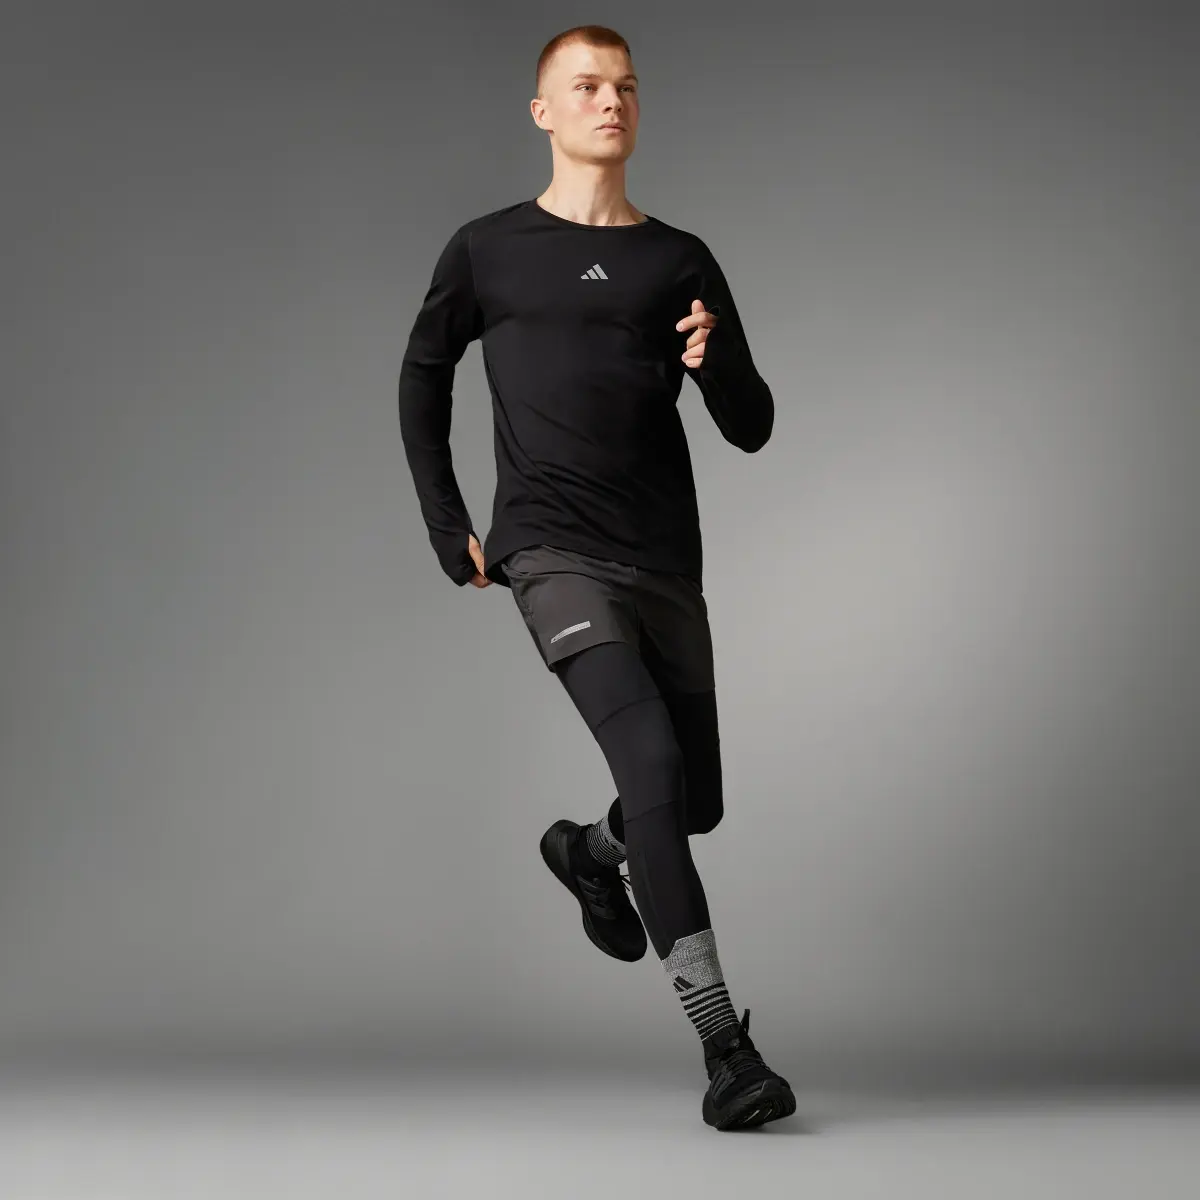 Adidas Camisola para Running Merino Conquer the Elements Ultimate. 3